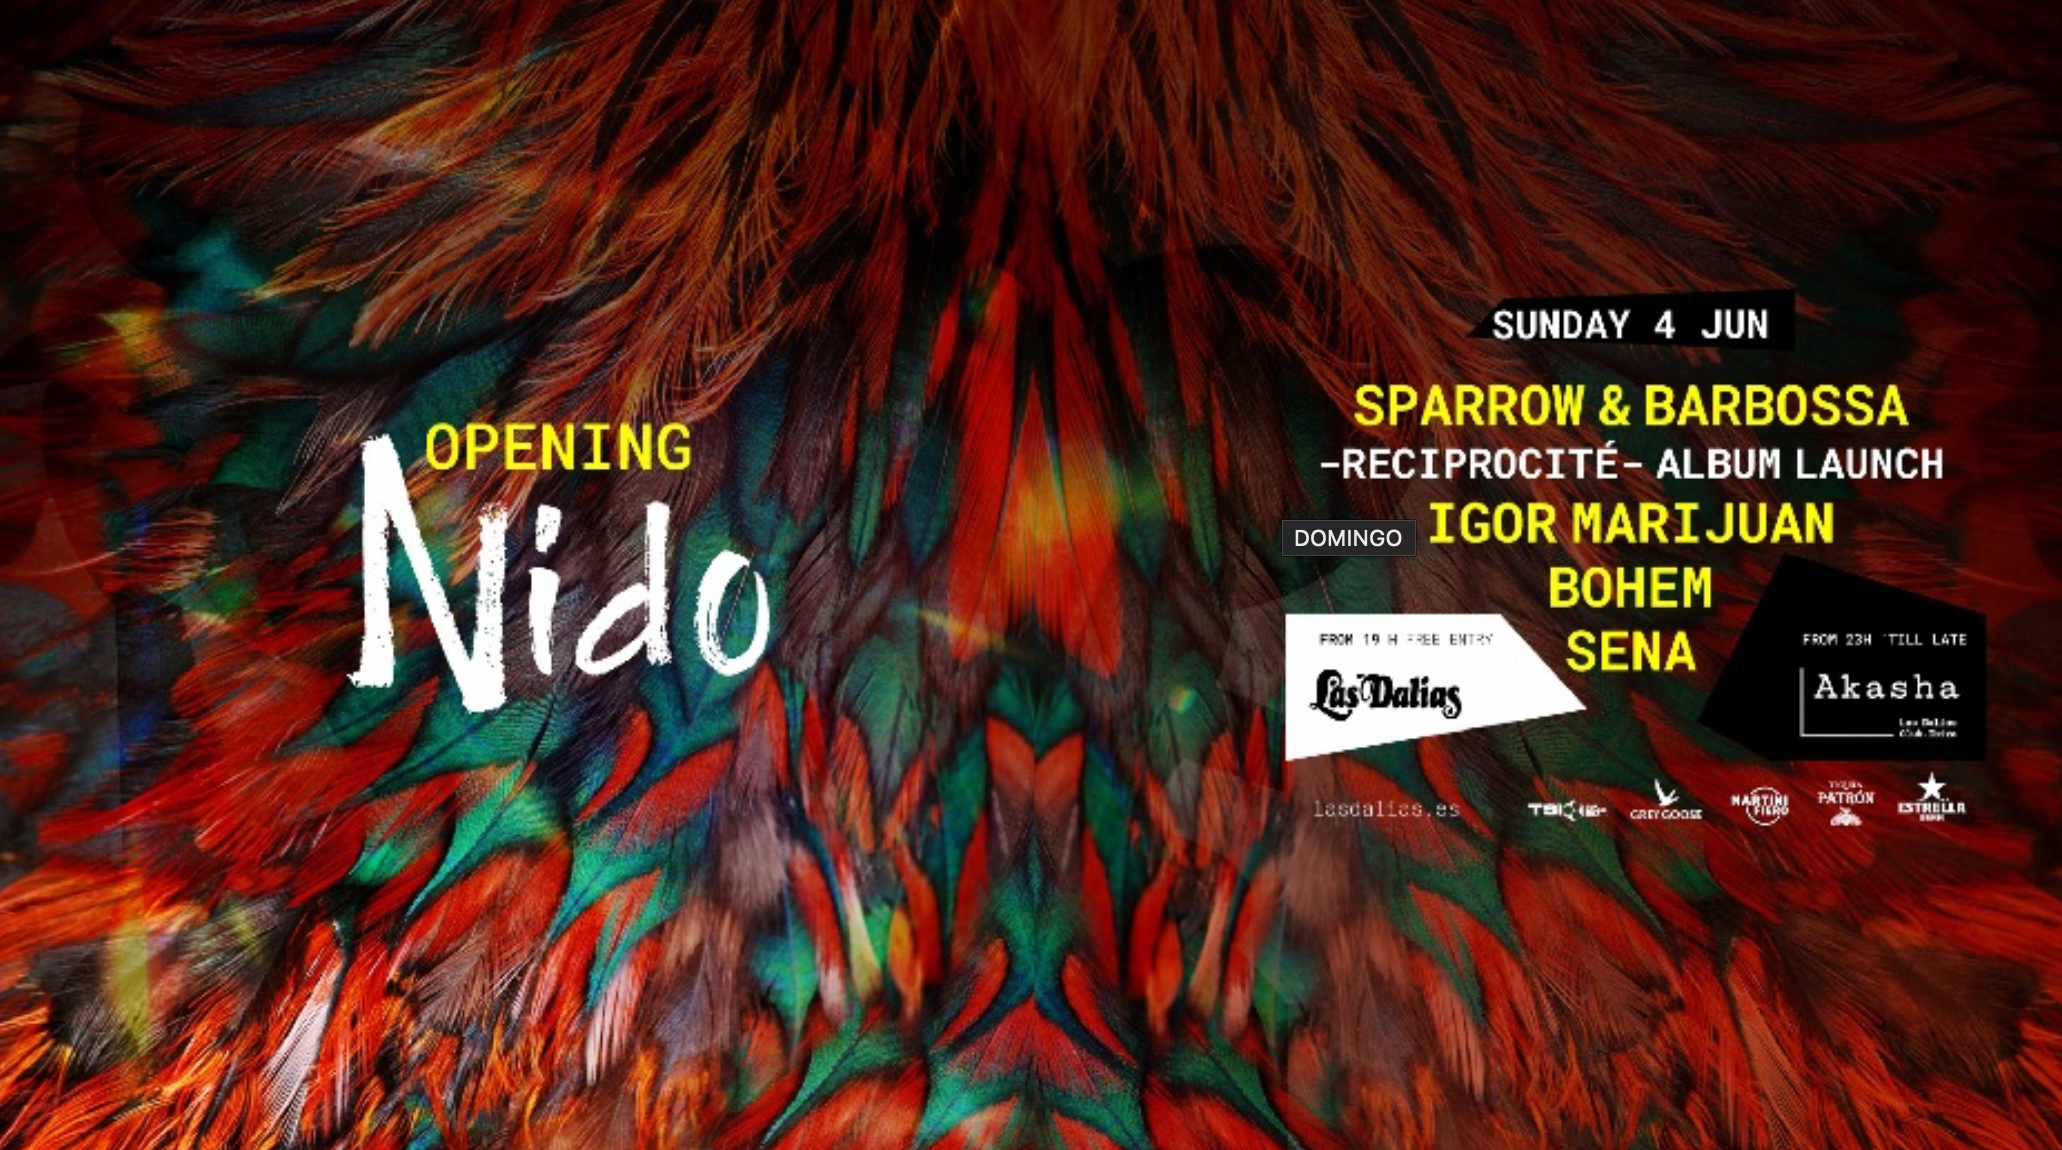 Nido Opening Party | Sparrow & Barbossa's Reciprocité Album Launch - フライヤー表